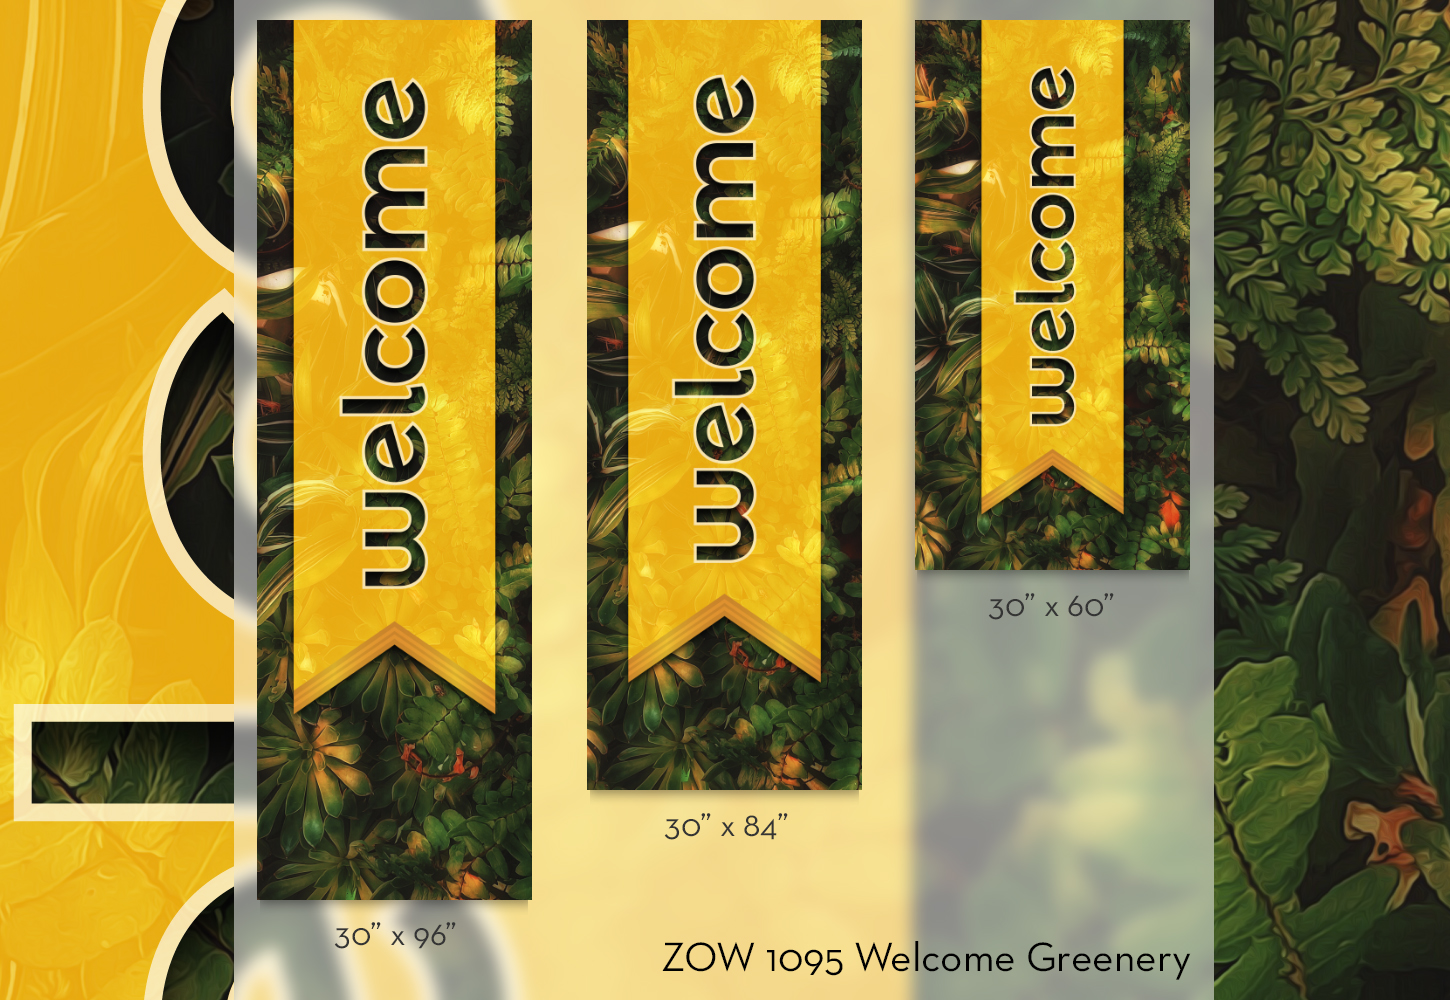 ZOW 1095 Welcome Greenery